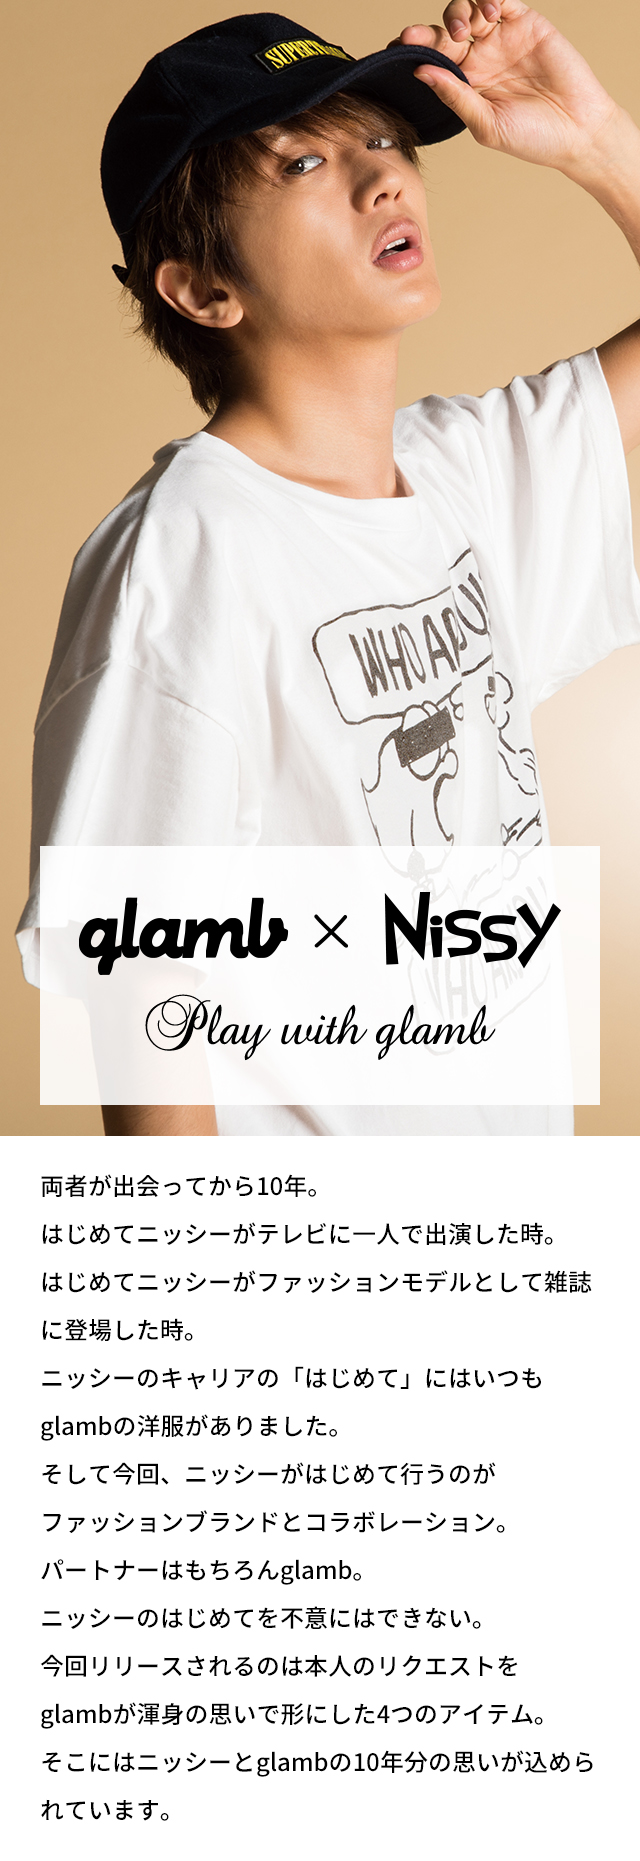 Nissy×glamb【Play with glamb】コラボレーション特設サイト